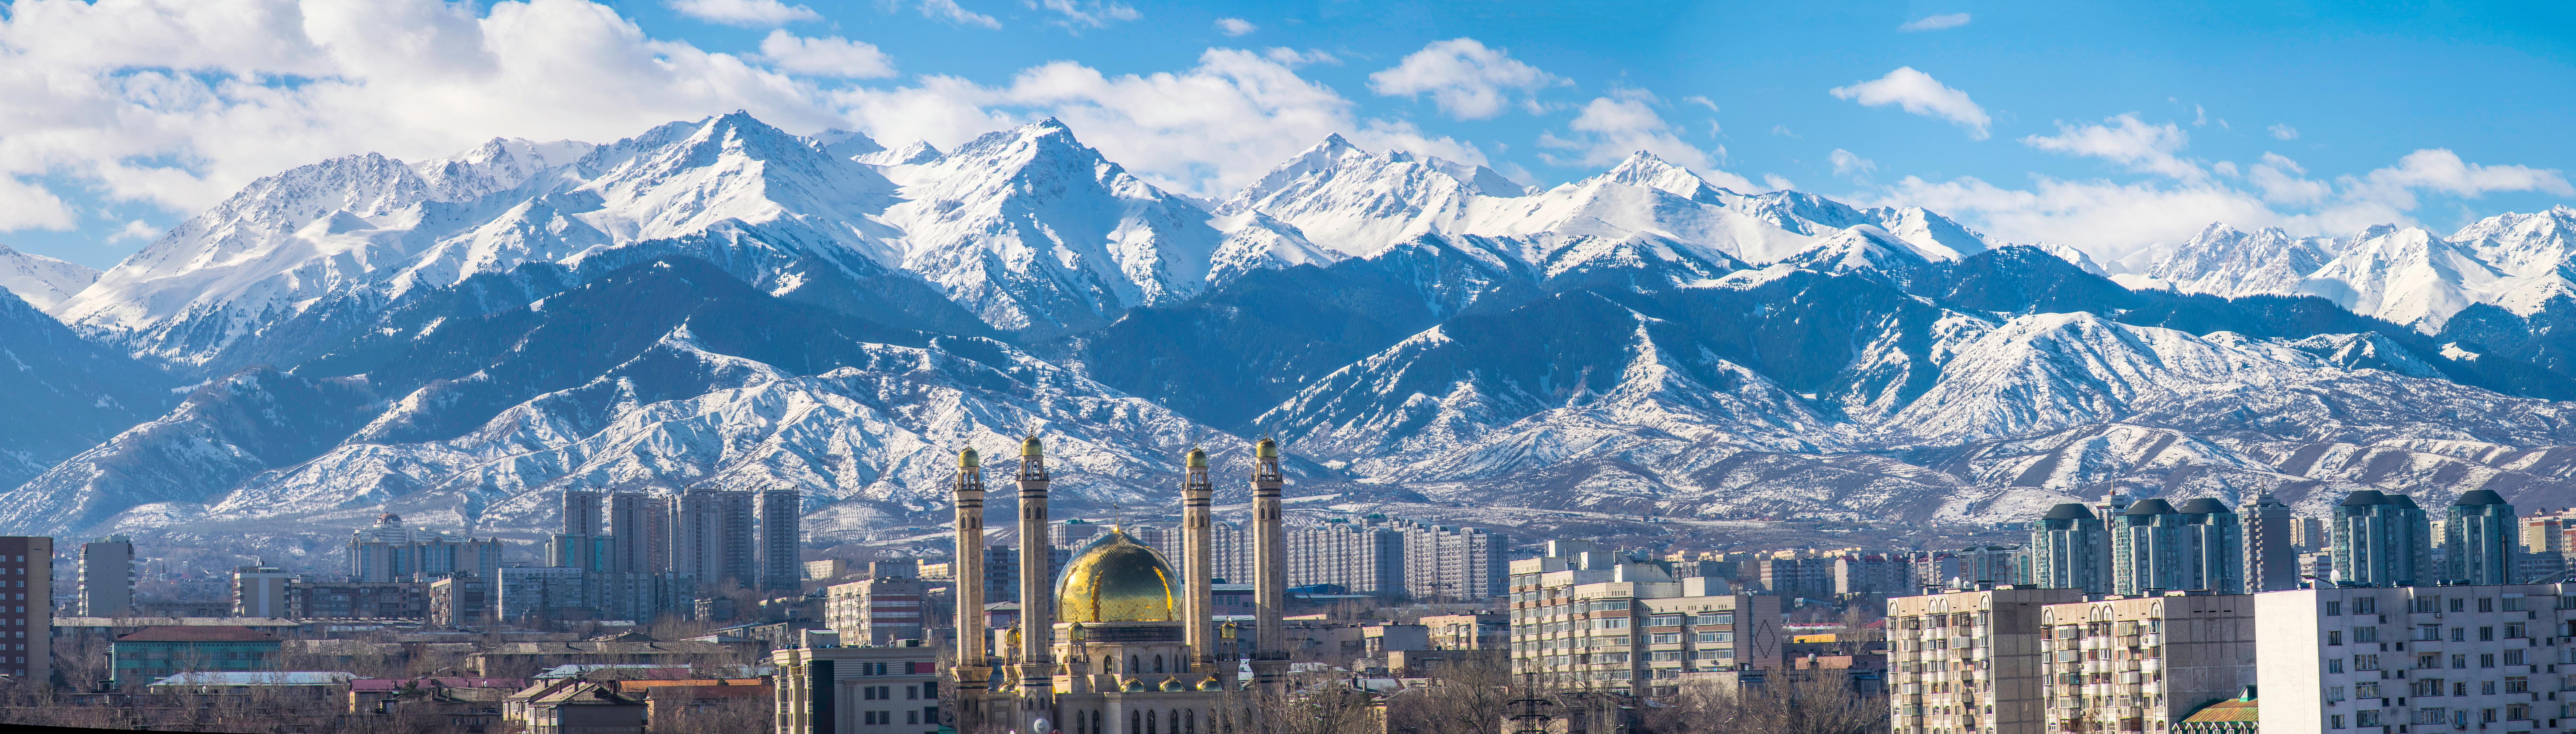 Almaty skyline © Almazoff / Shutterstock